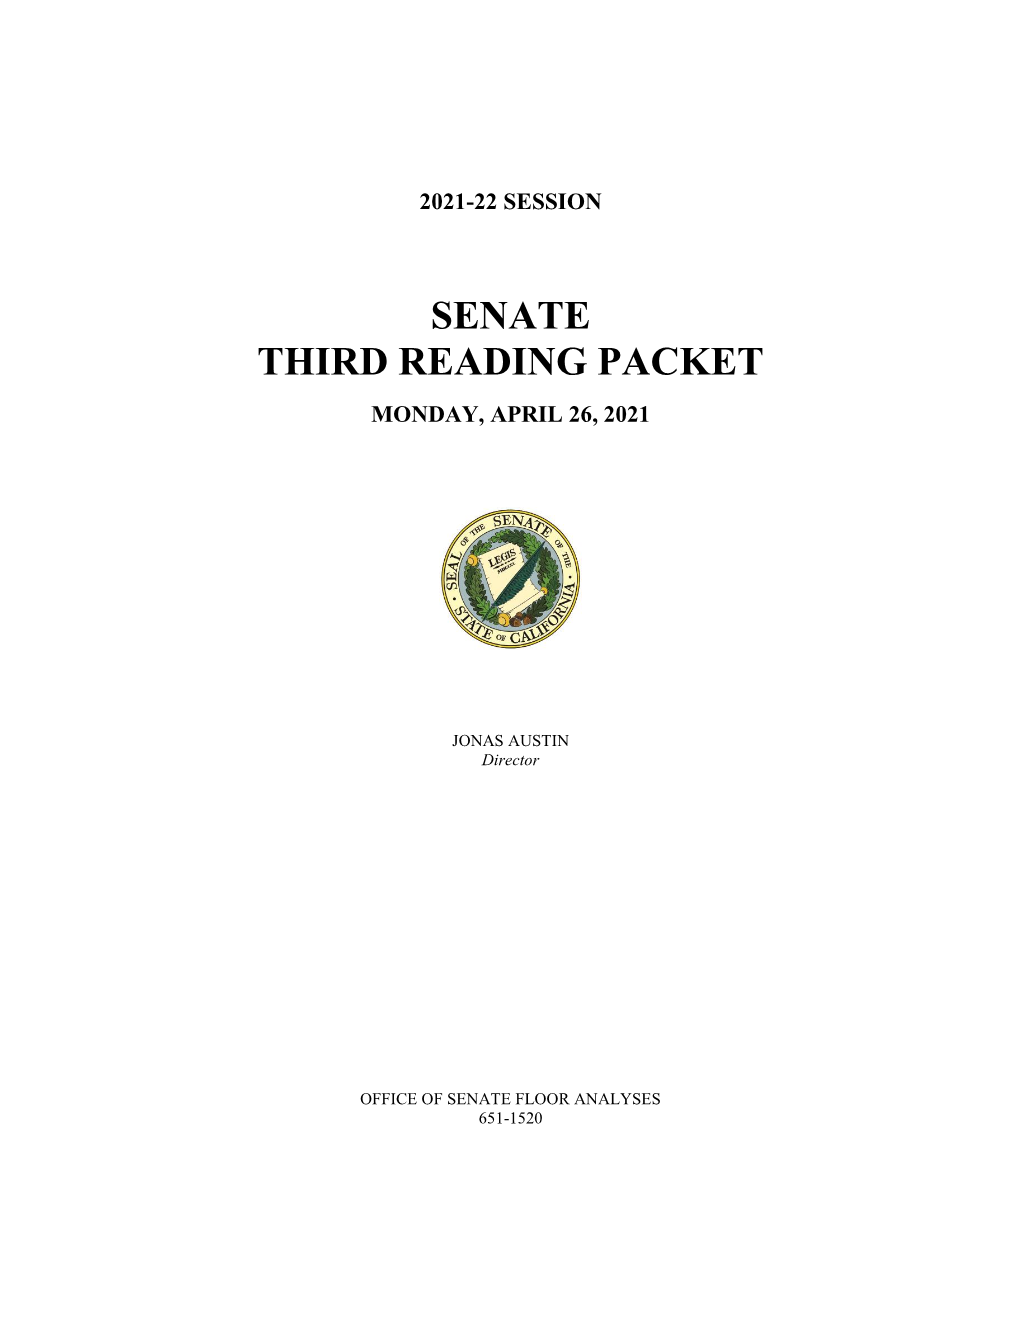 Senate Third Reading Packet Monday, April 26, 2021